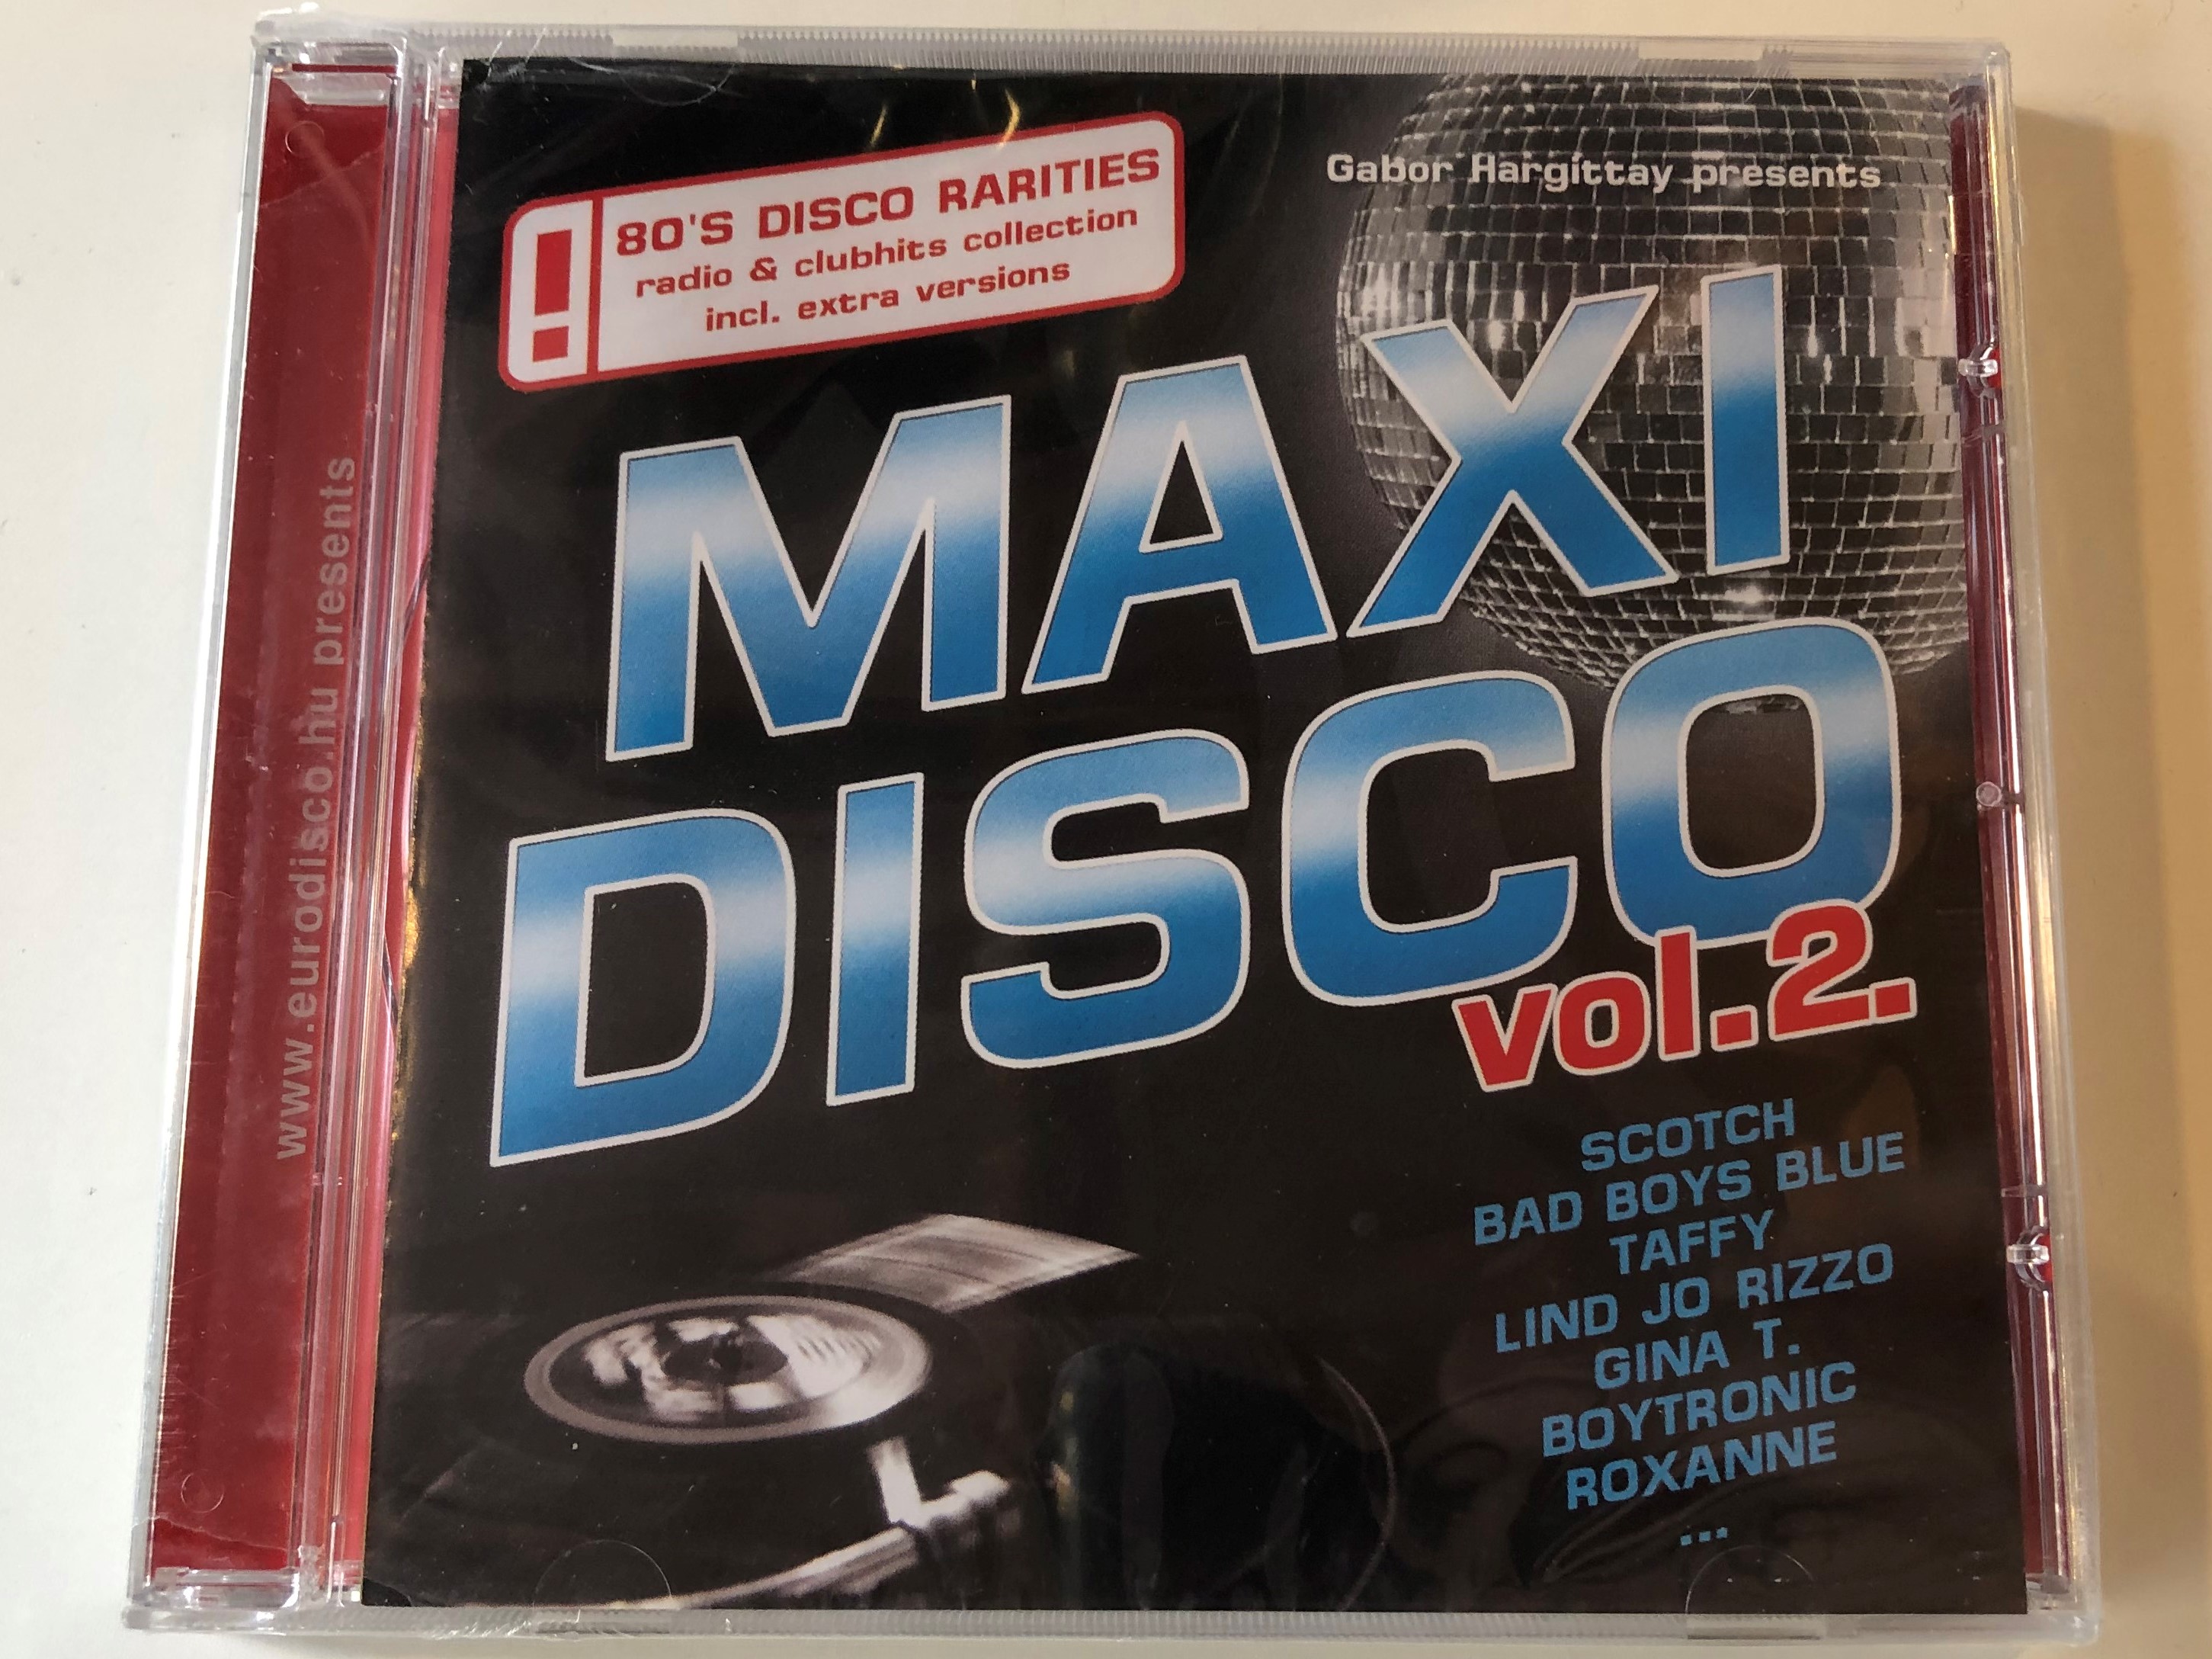 Gabor Hargittay presents Maxi Disco Vol. 2. / Scotch, Bad Boys Blue, Taffy,  Linda Jo Rizzo, Gina T., Boytronic, Roxanne... / 80's Disco Rarities radio  & clubhits collection incl. extra versions /